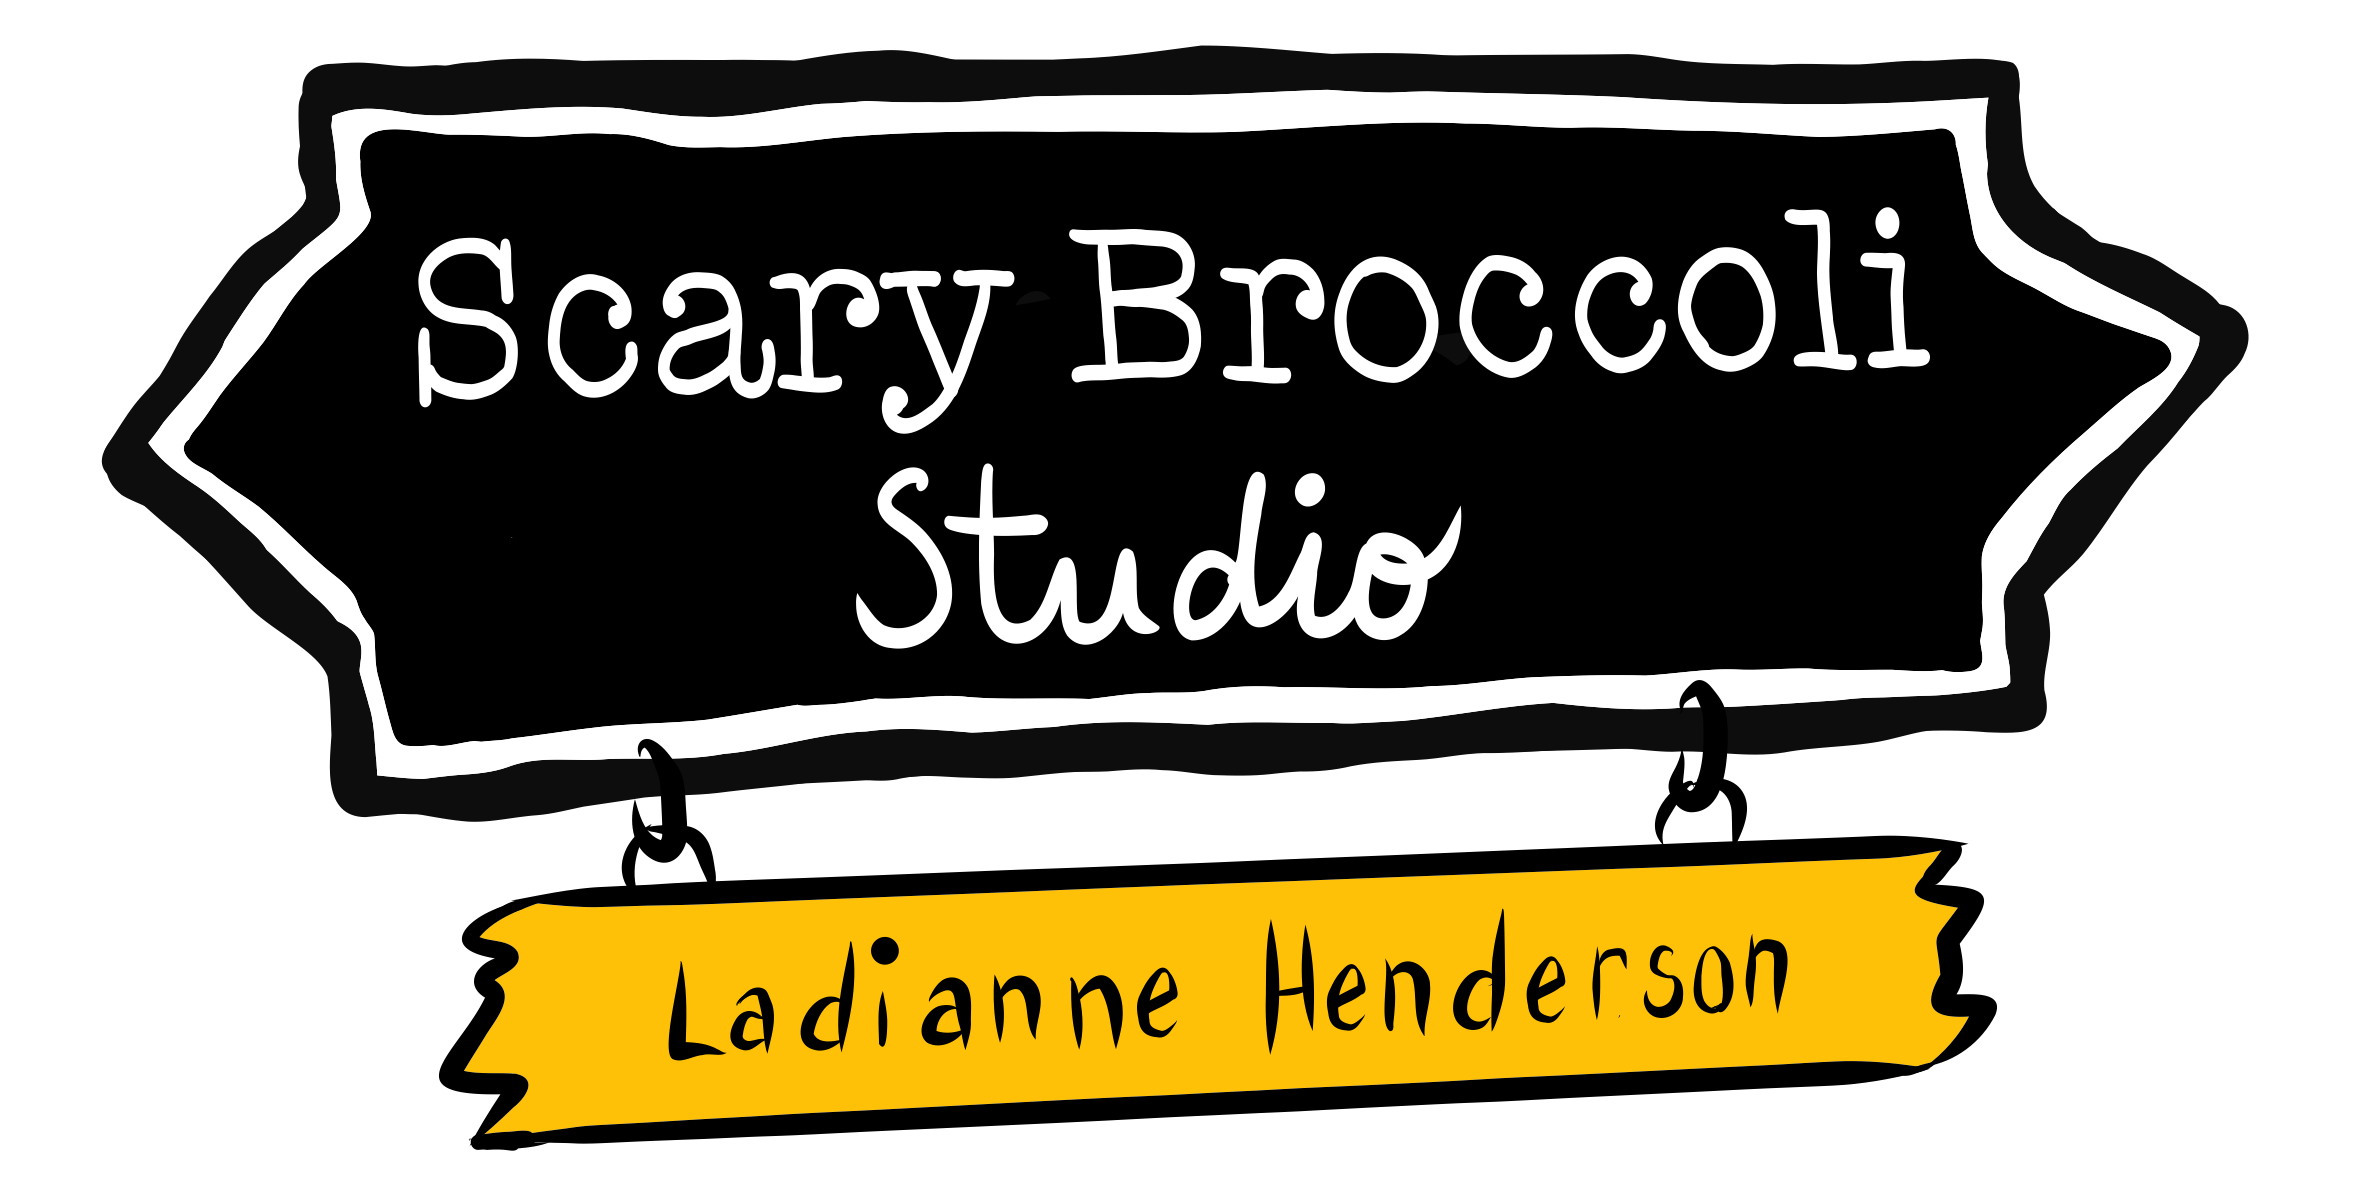 Ladianne Henderson - Scary Broccoli Studio